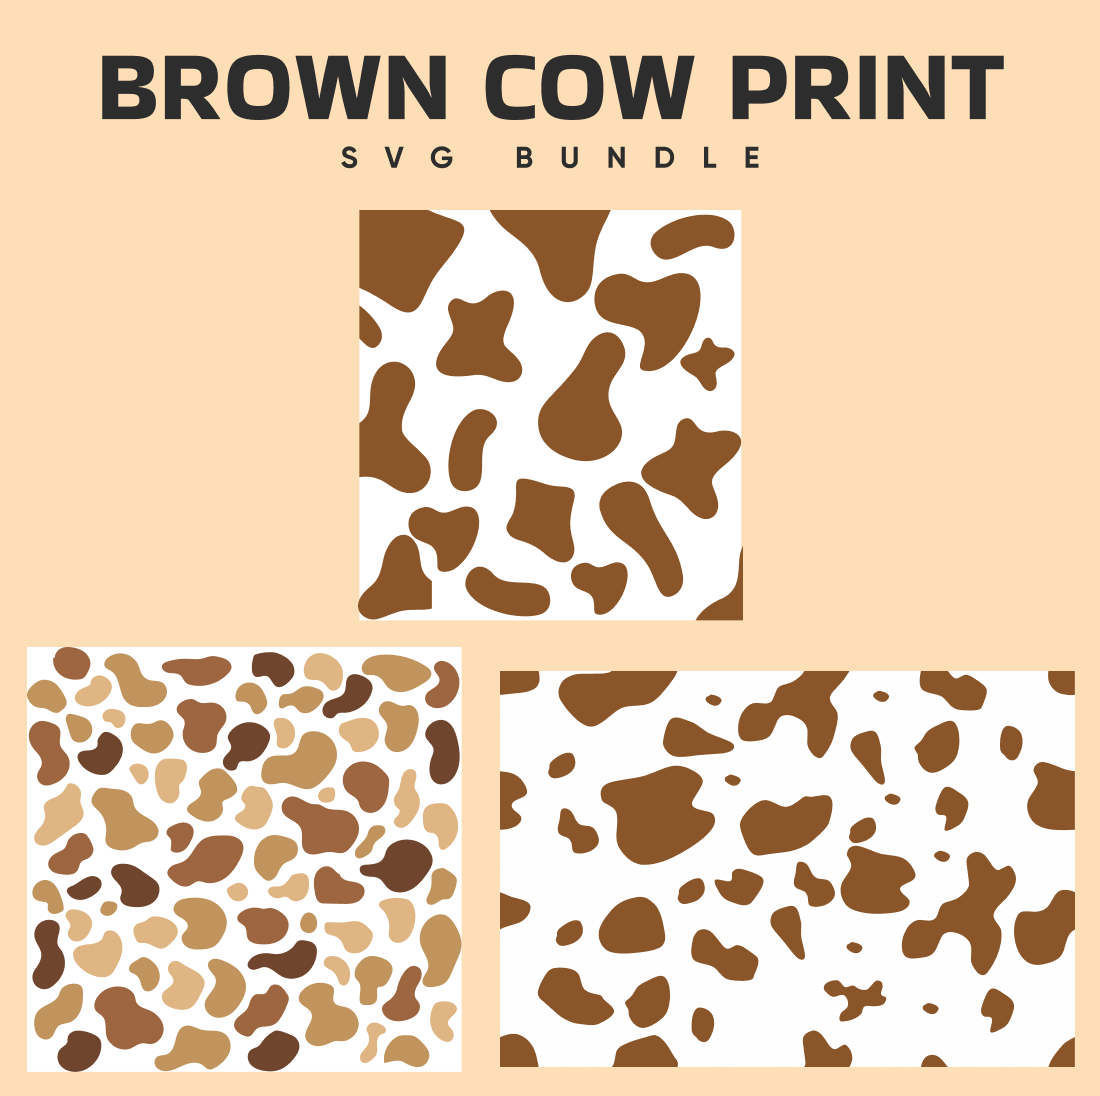 Brown Cow Print SVG.